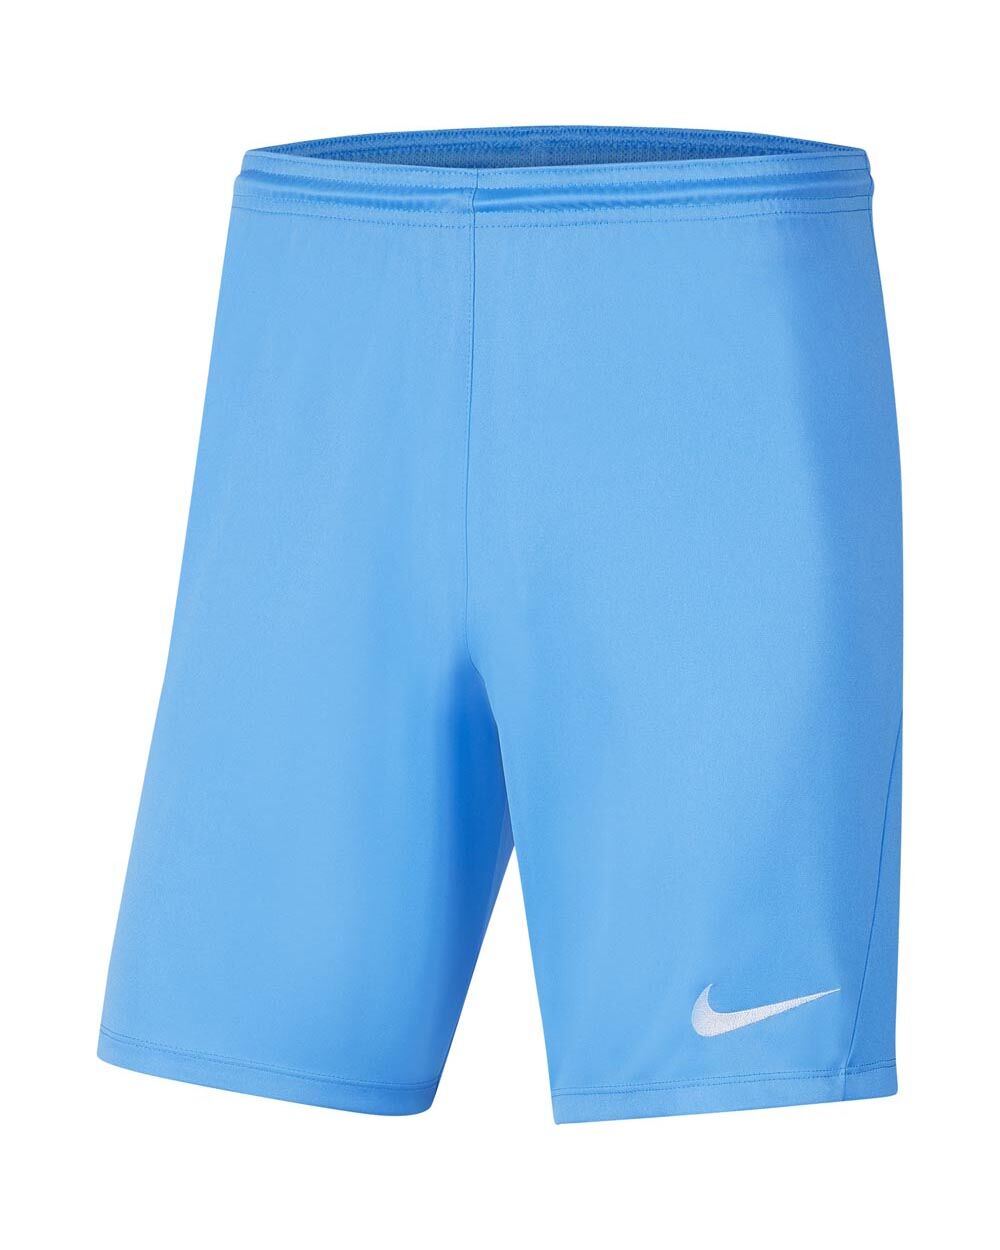 Nike Pantaloncini Park III Cielo Blu Uomo BV6855-412 M